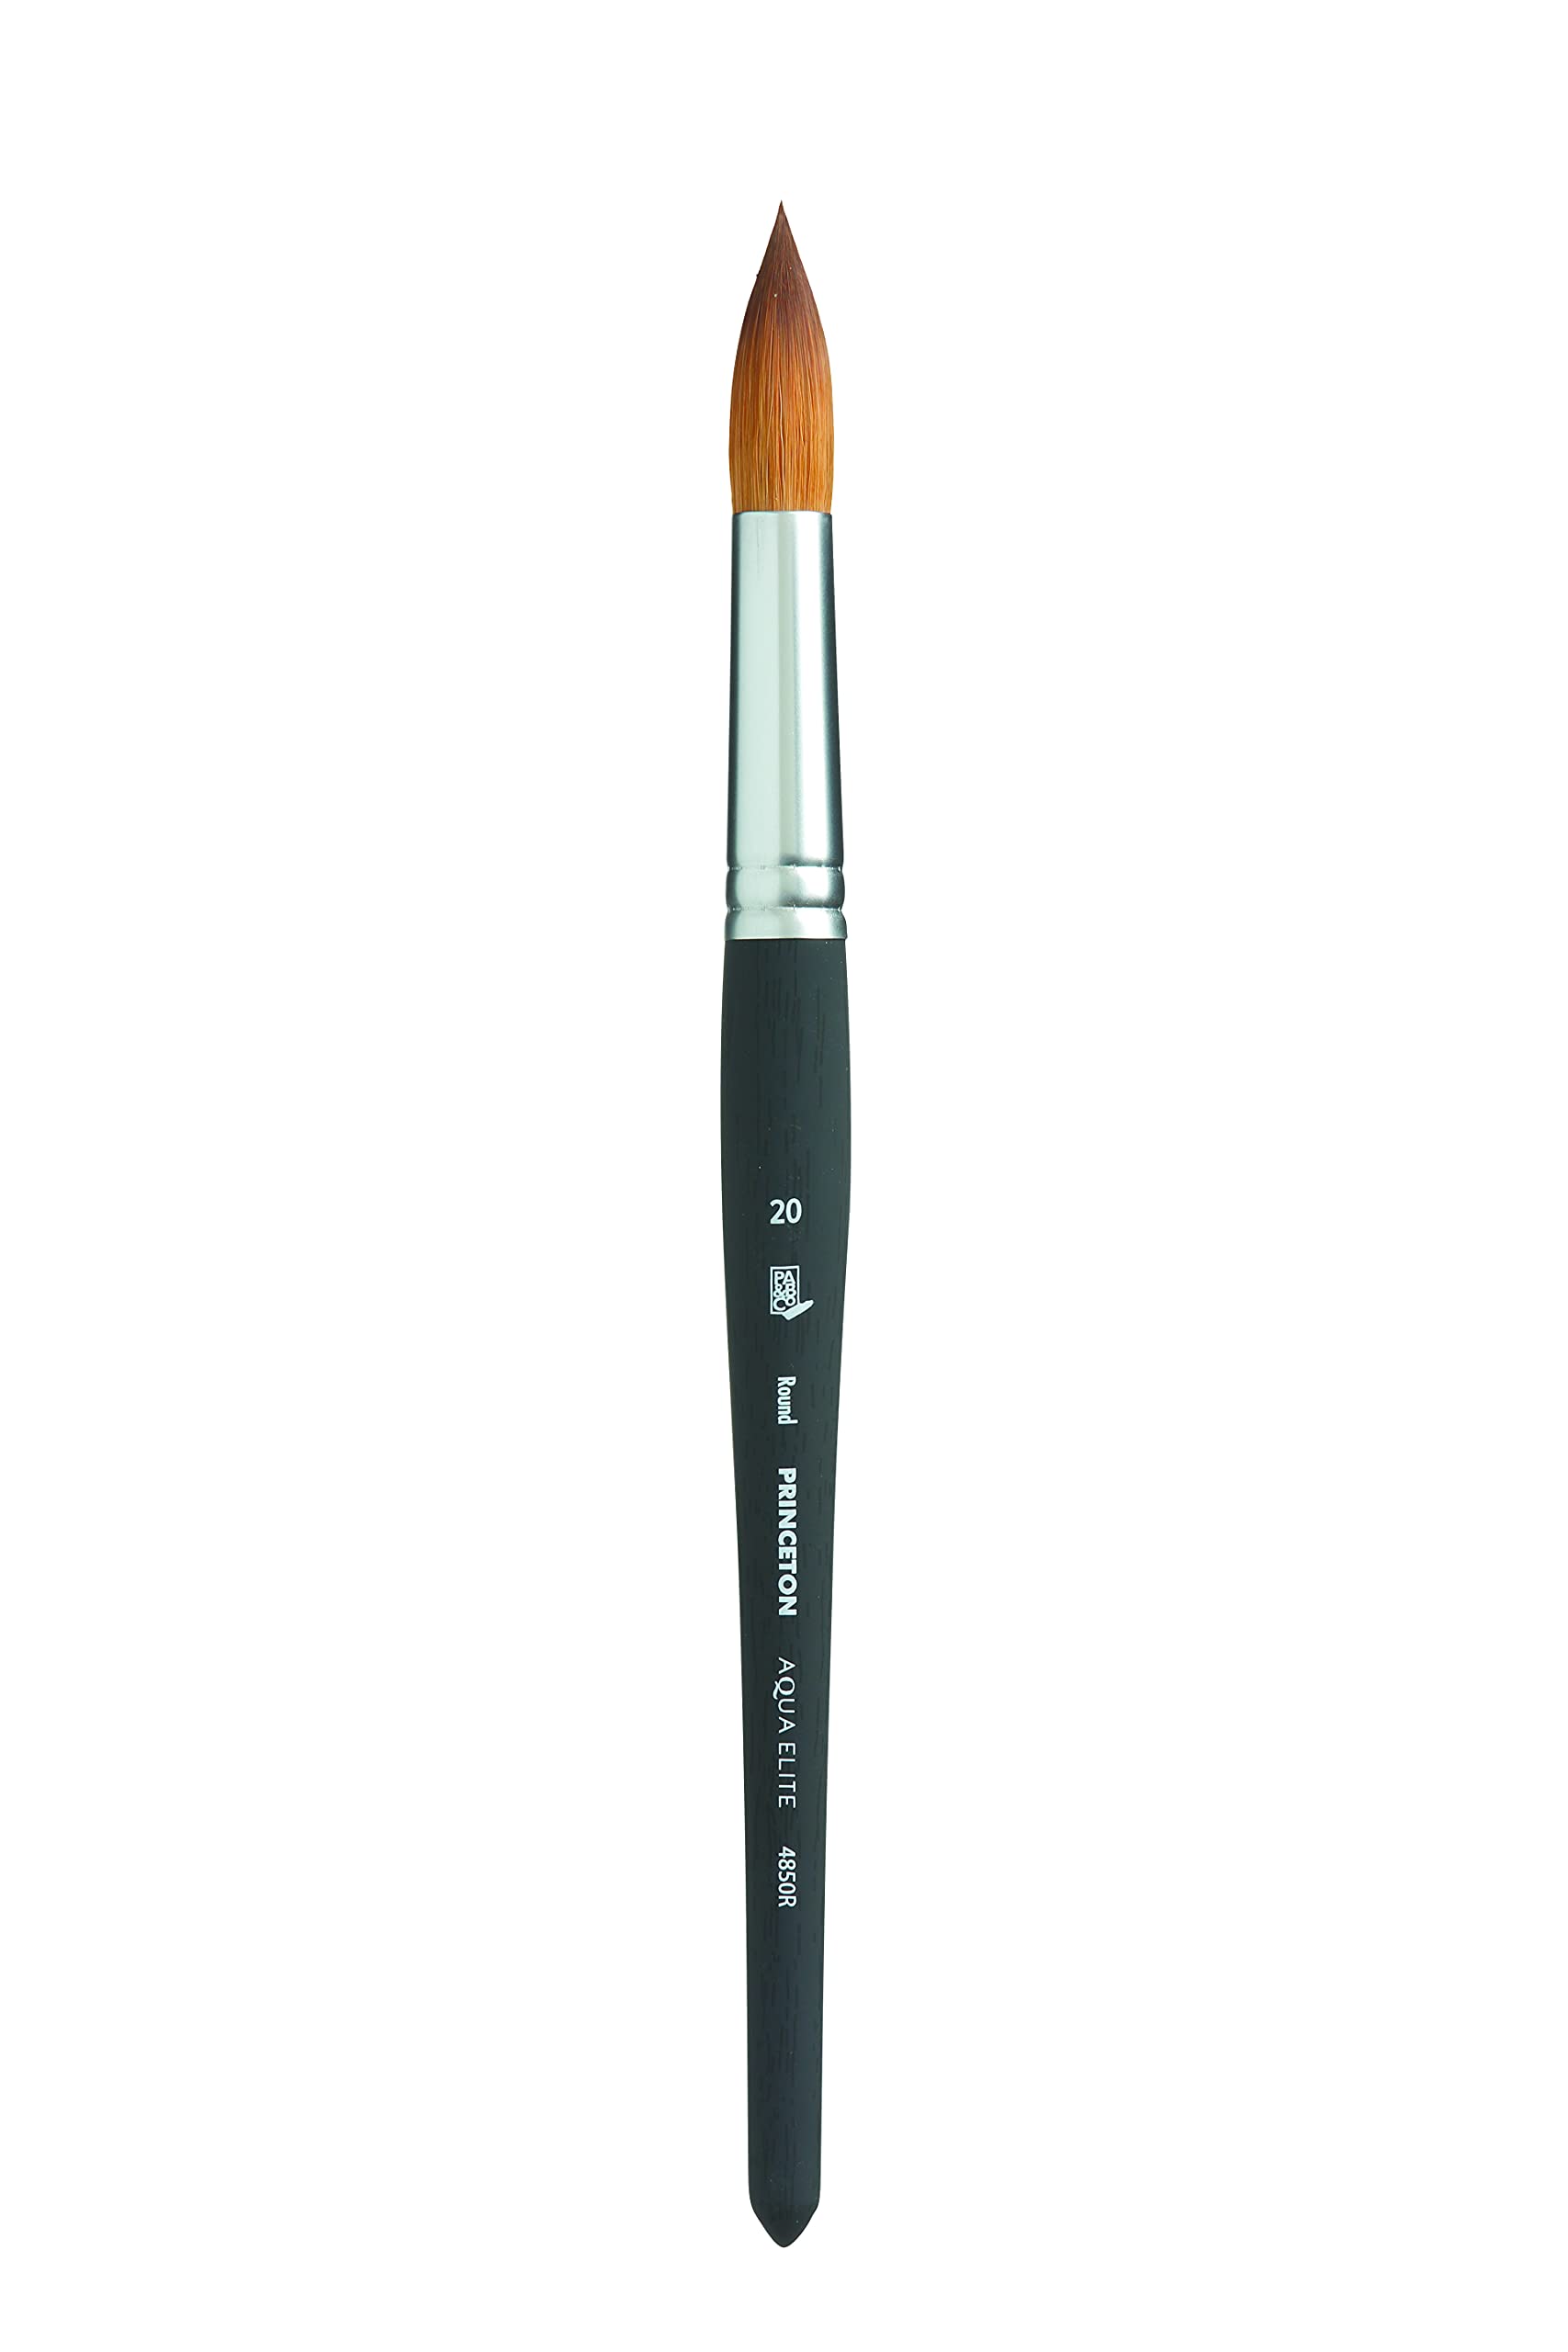 Princeton Aqua Elite Series 4850 Synthetic Brush - Travel Round, Size 4